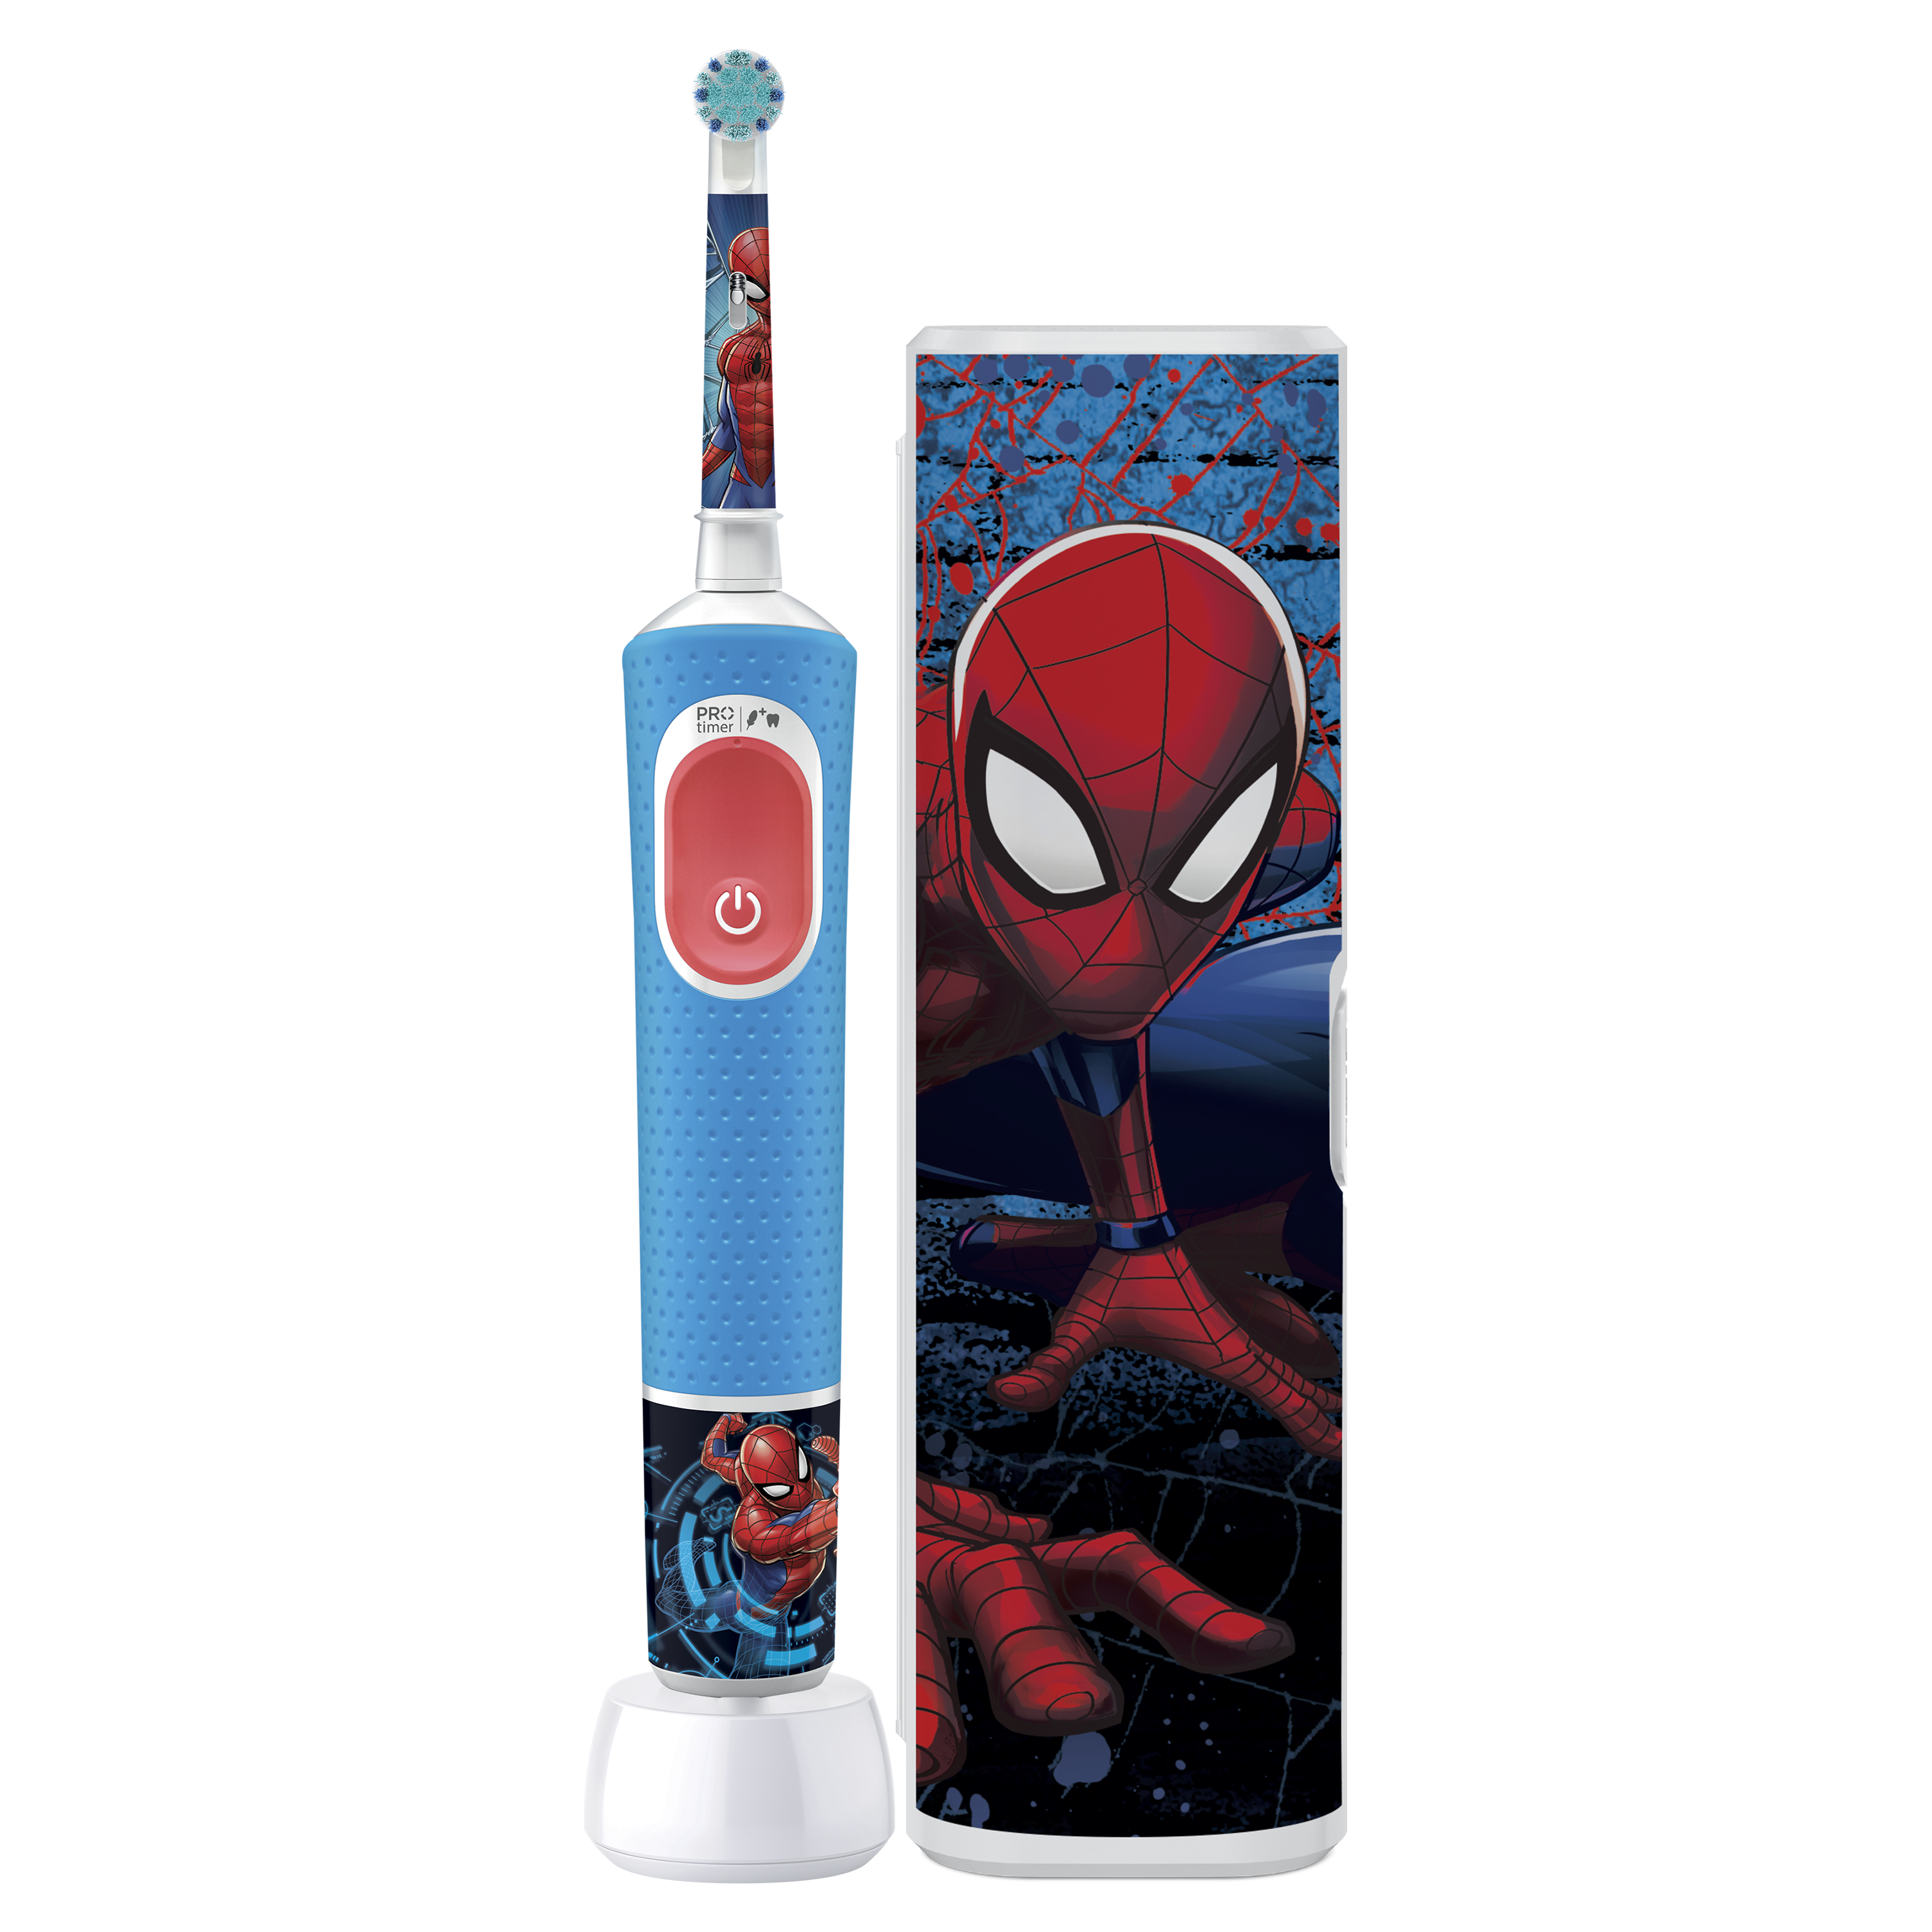 Oral-B Cepillo Eléctrico Vitality Kids Spiderman + Estuche de Viaje